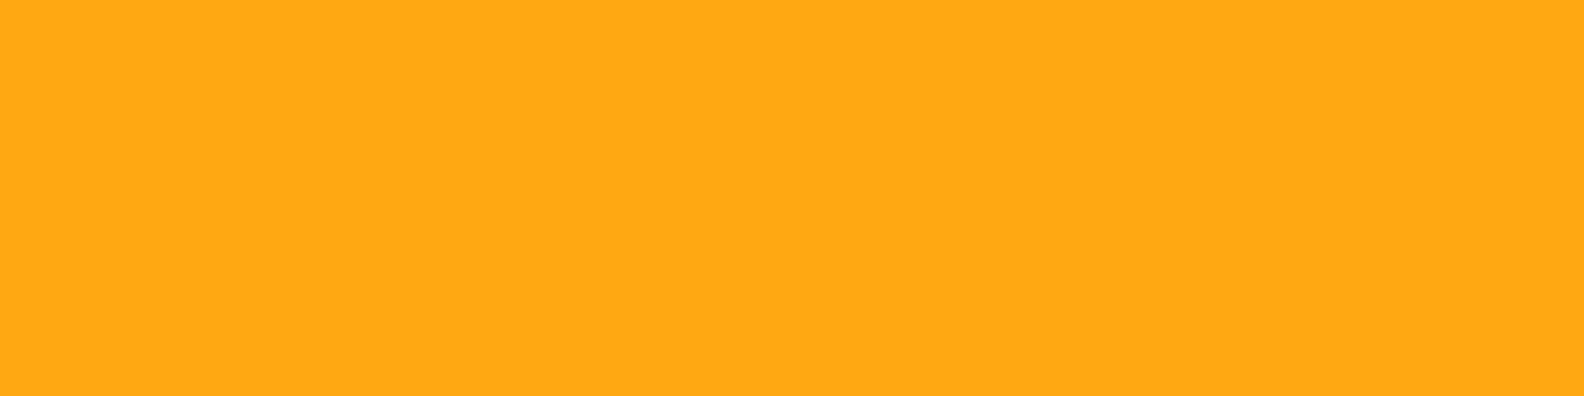 1584x396 Dark Tangerine Solid Color Background